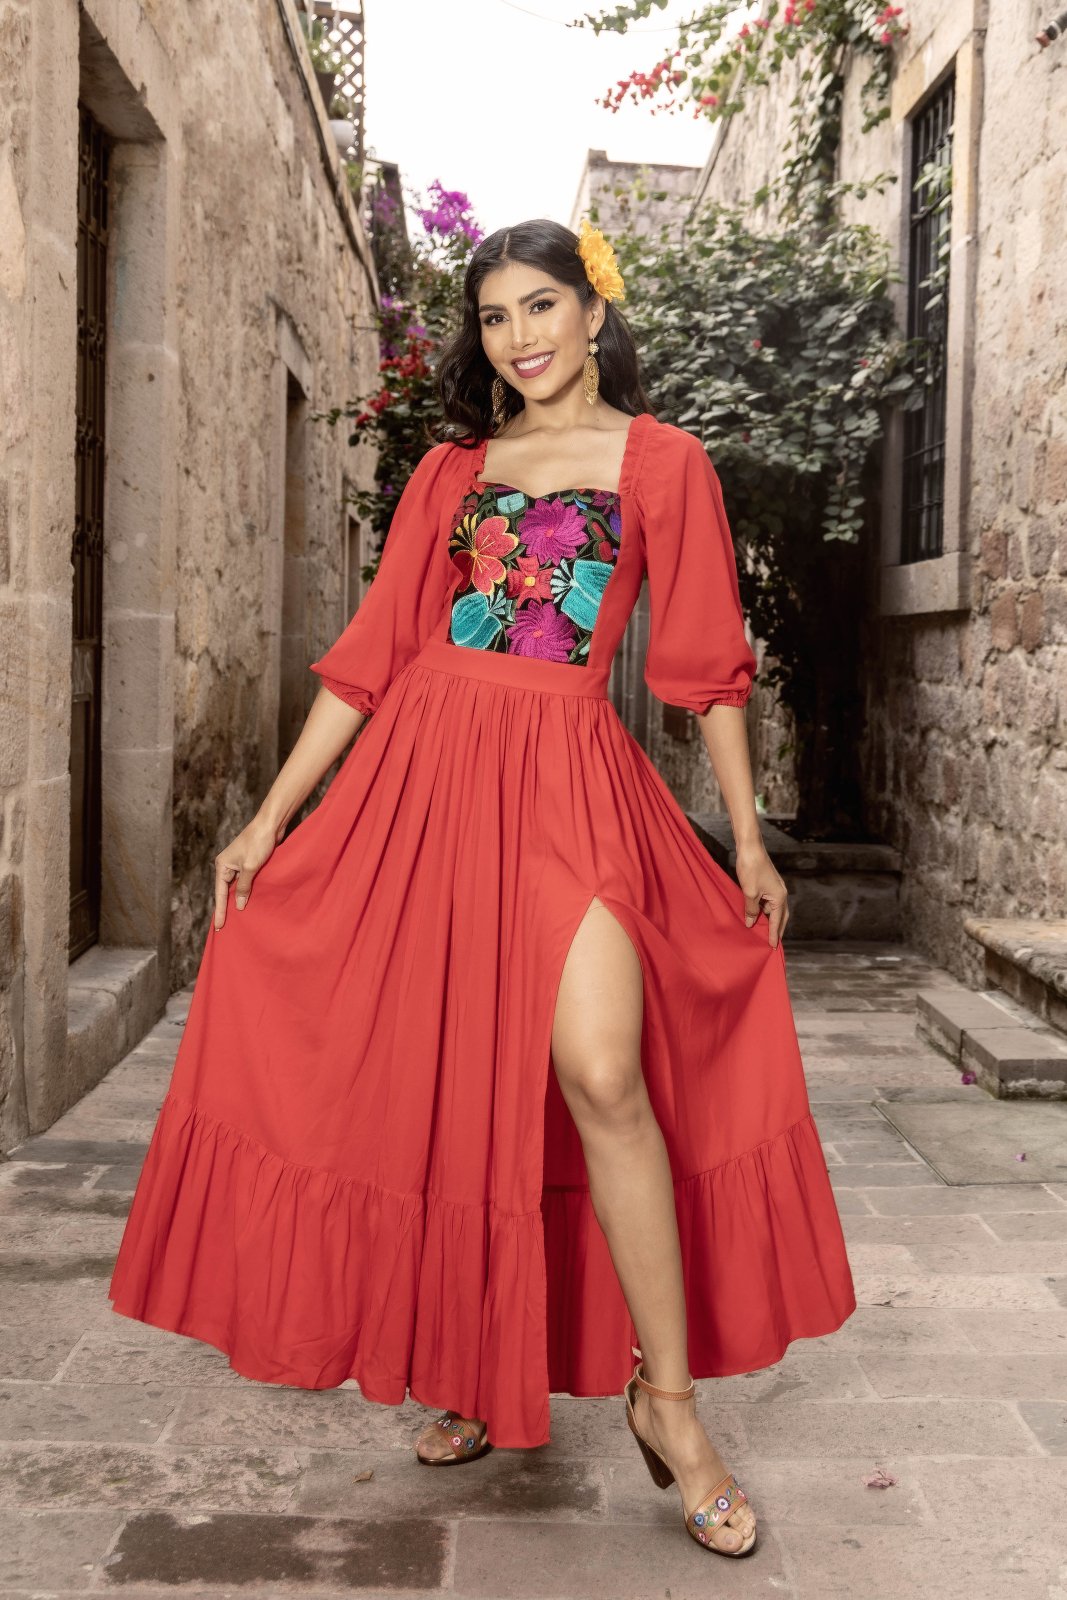 Multicolor Floral Mexican Dress. Red Dress-Multicolor Floral Design